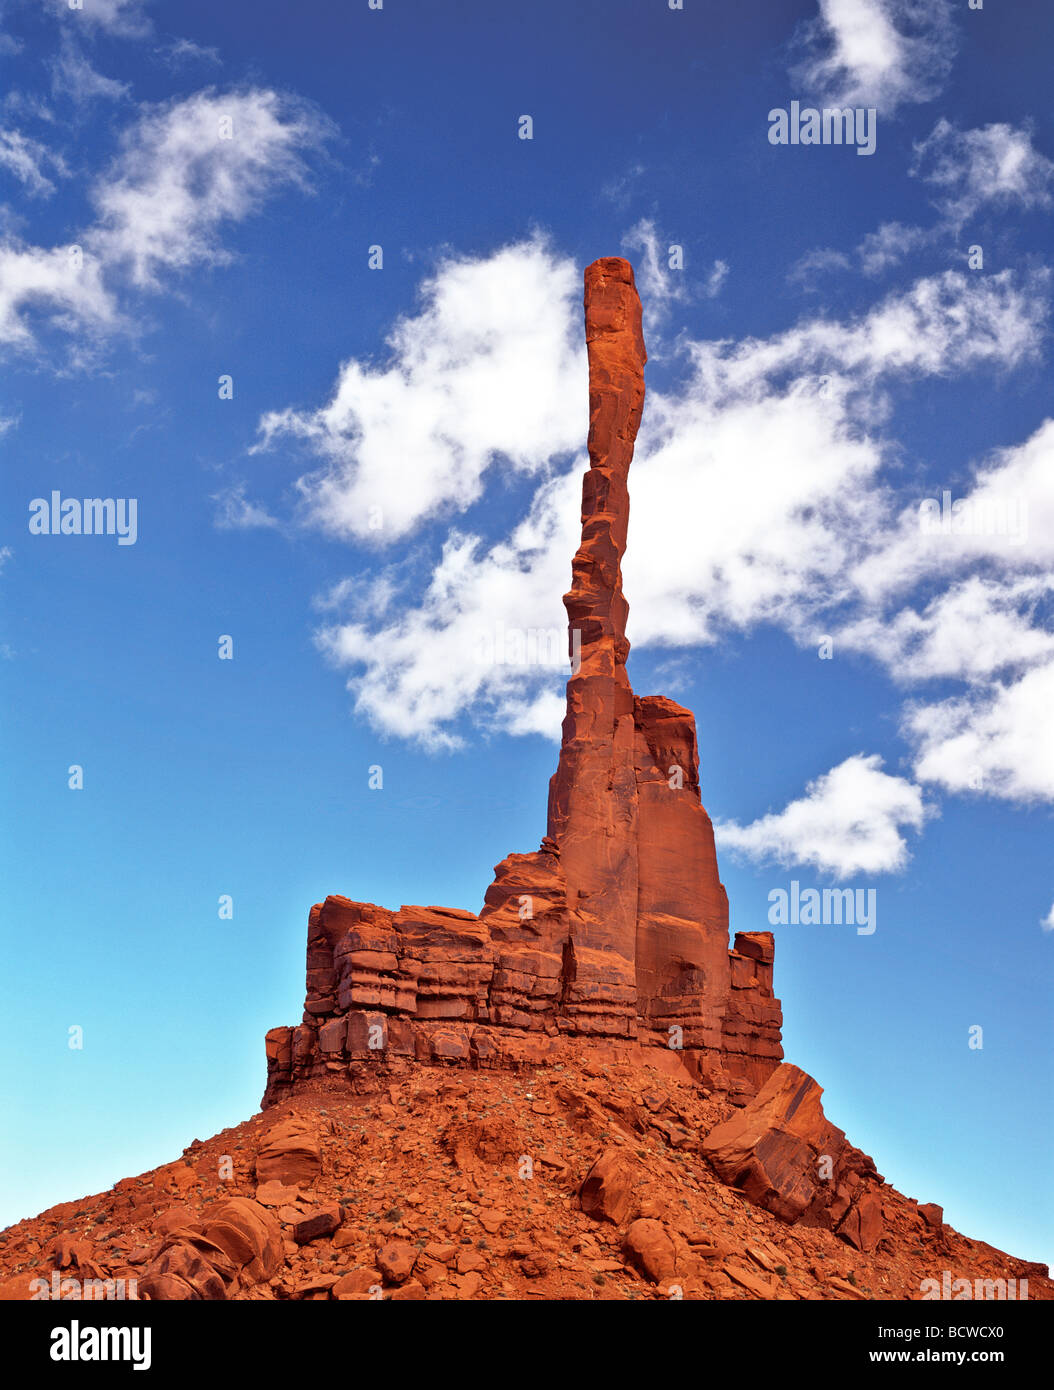 Totem pole rock formation, Monument Valley, Arizona, USA Stock Photo